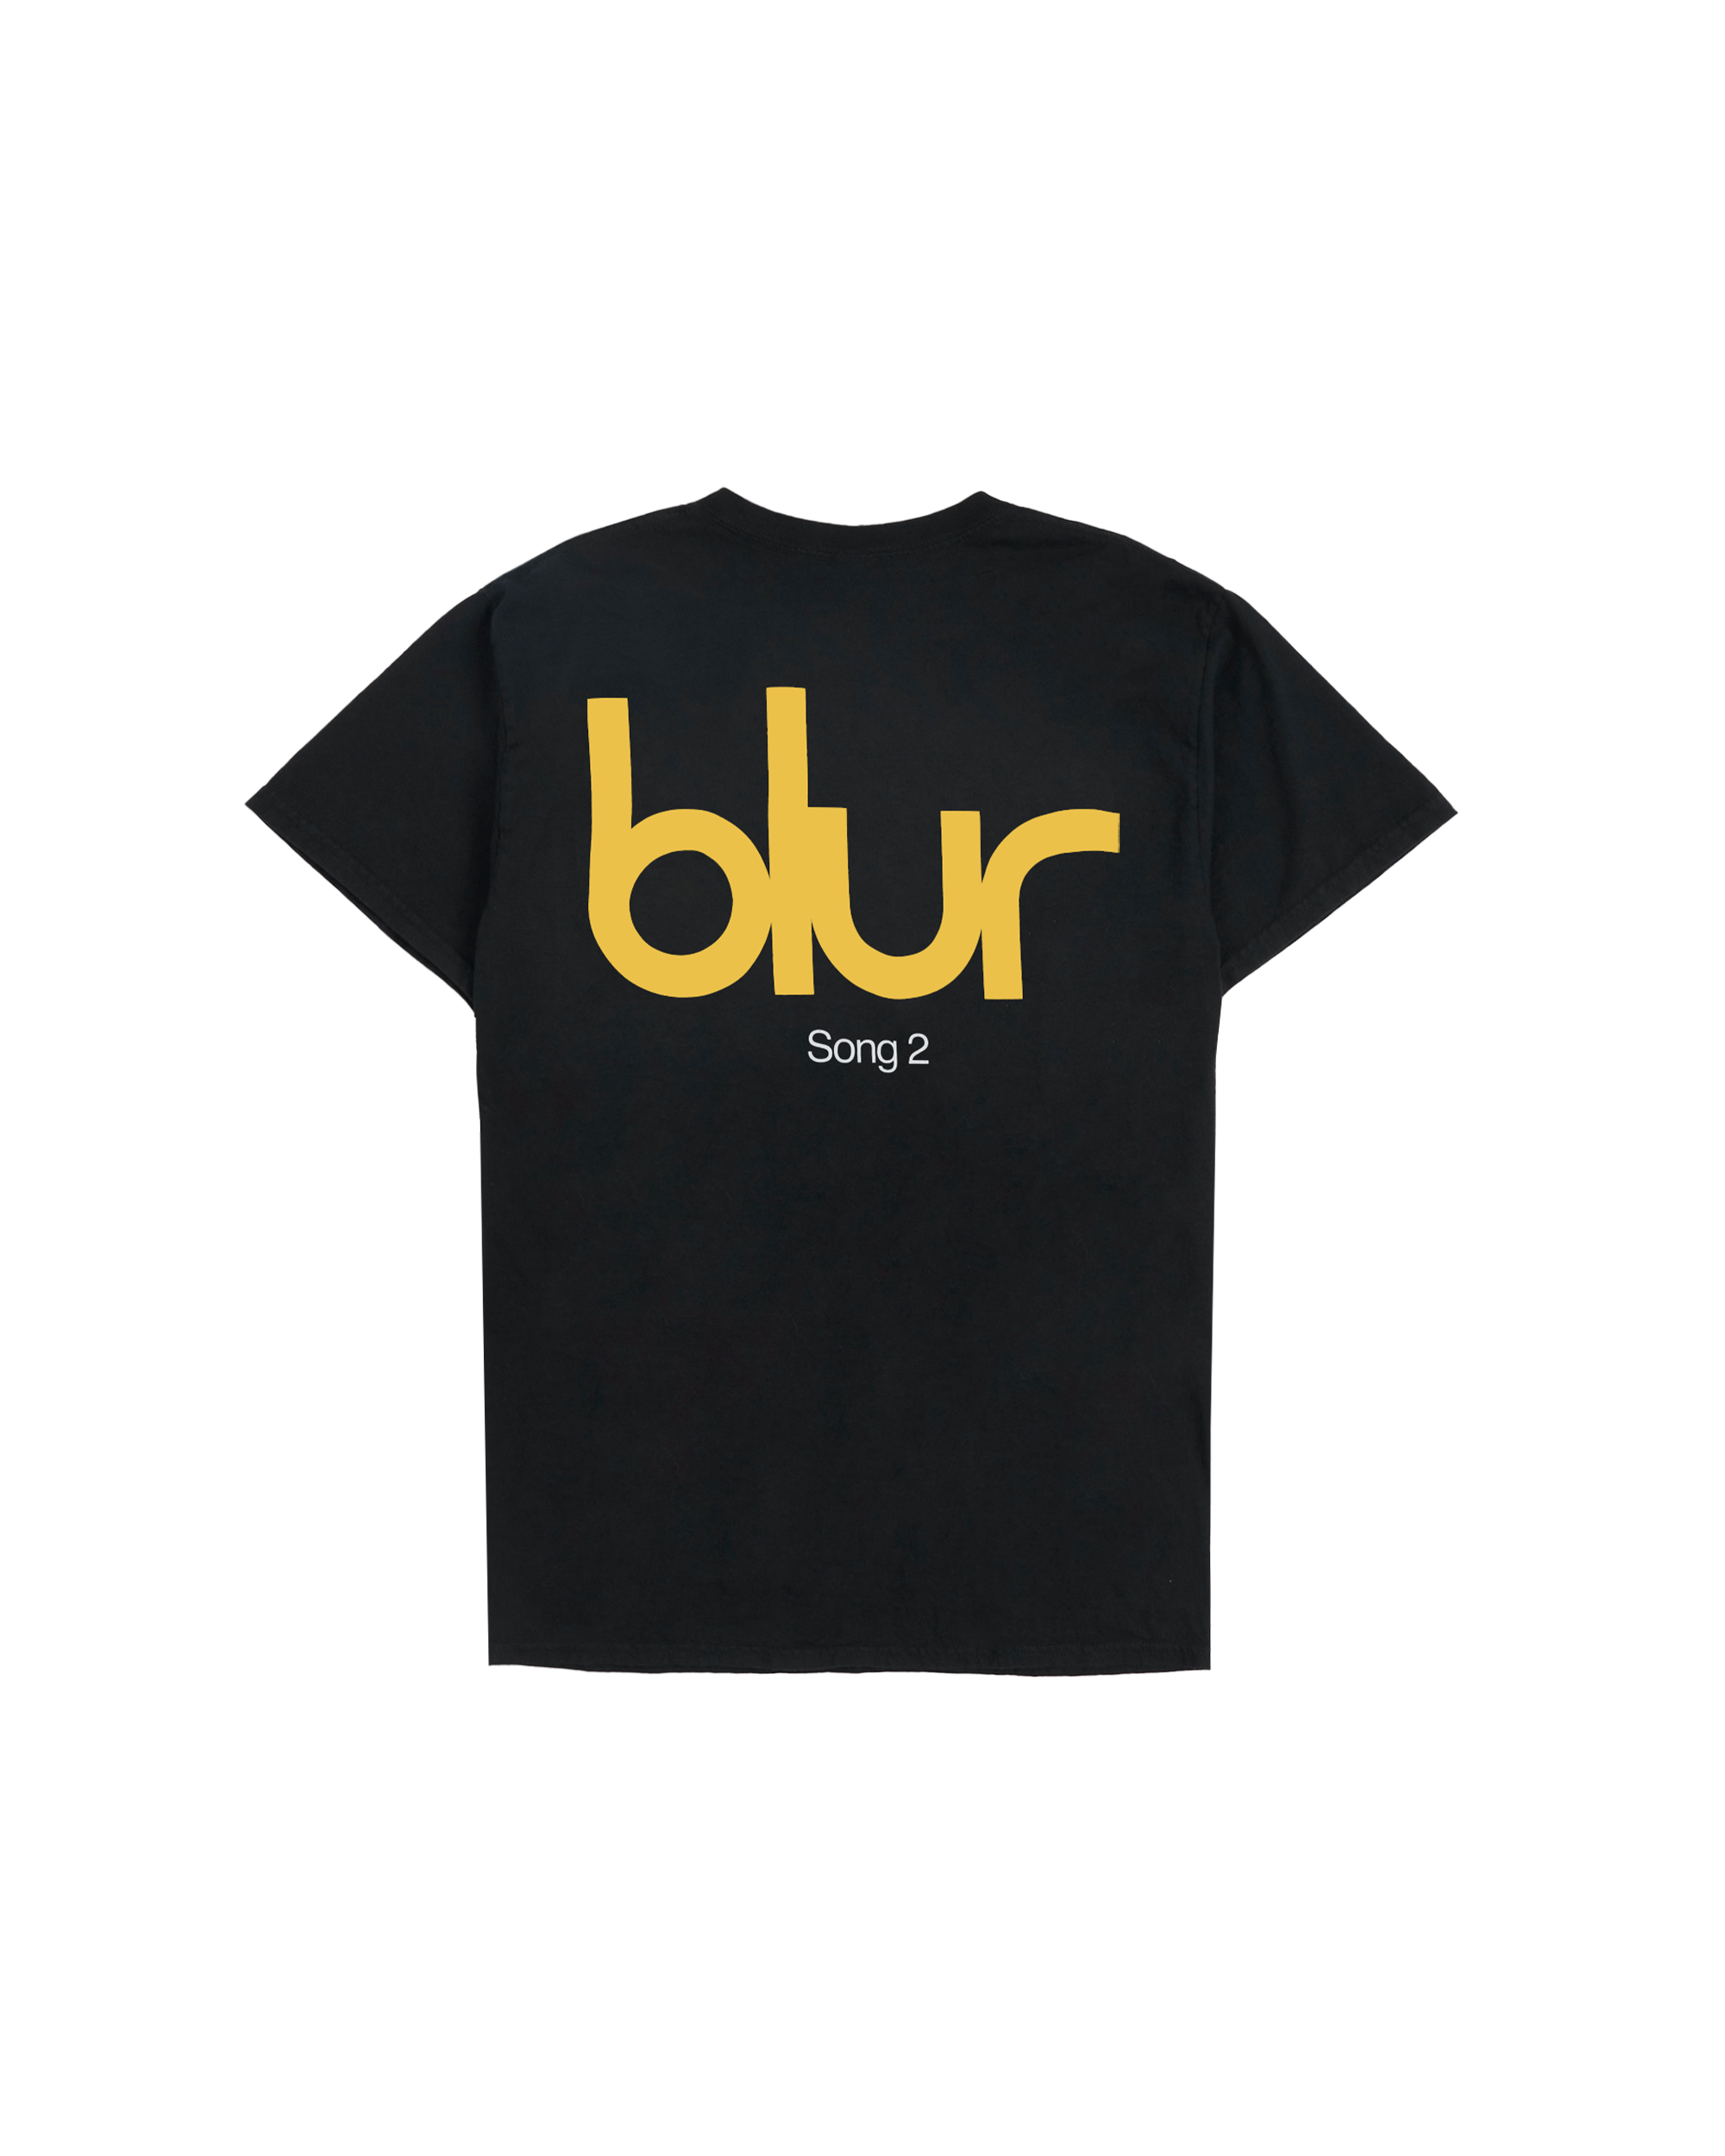 Blur Song 2 T-shirt - Black